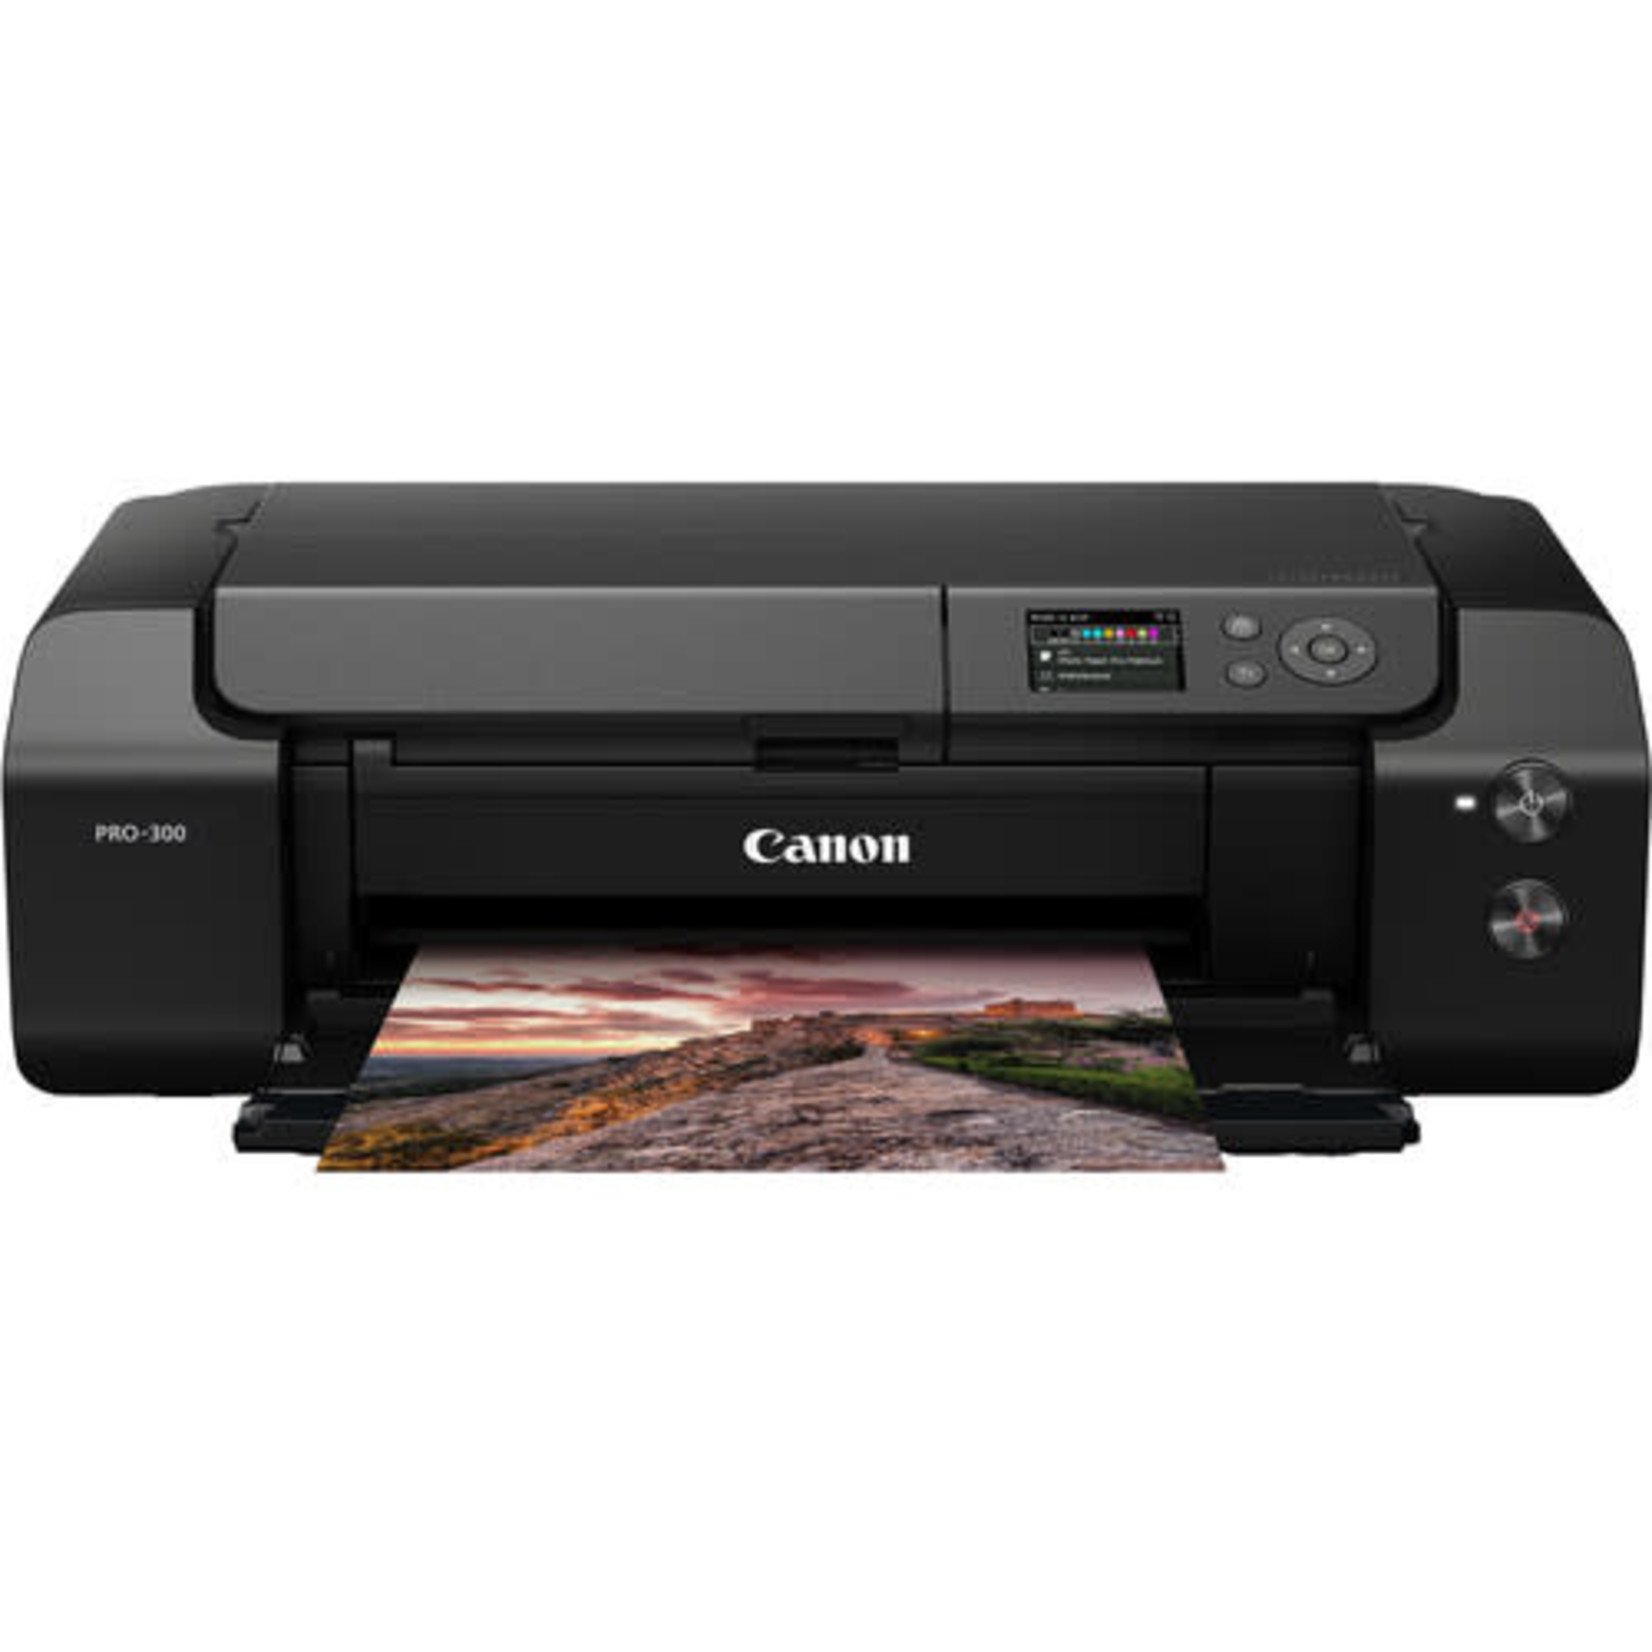 Canon Canon imagePROGRAF PRO-300 13" Professional Photographic Inkjet Printer